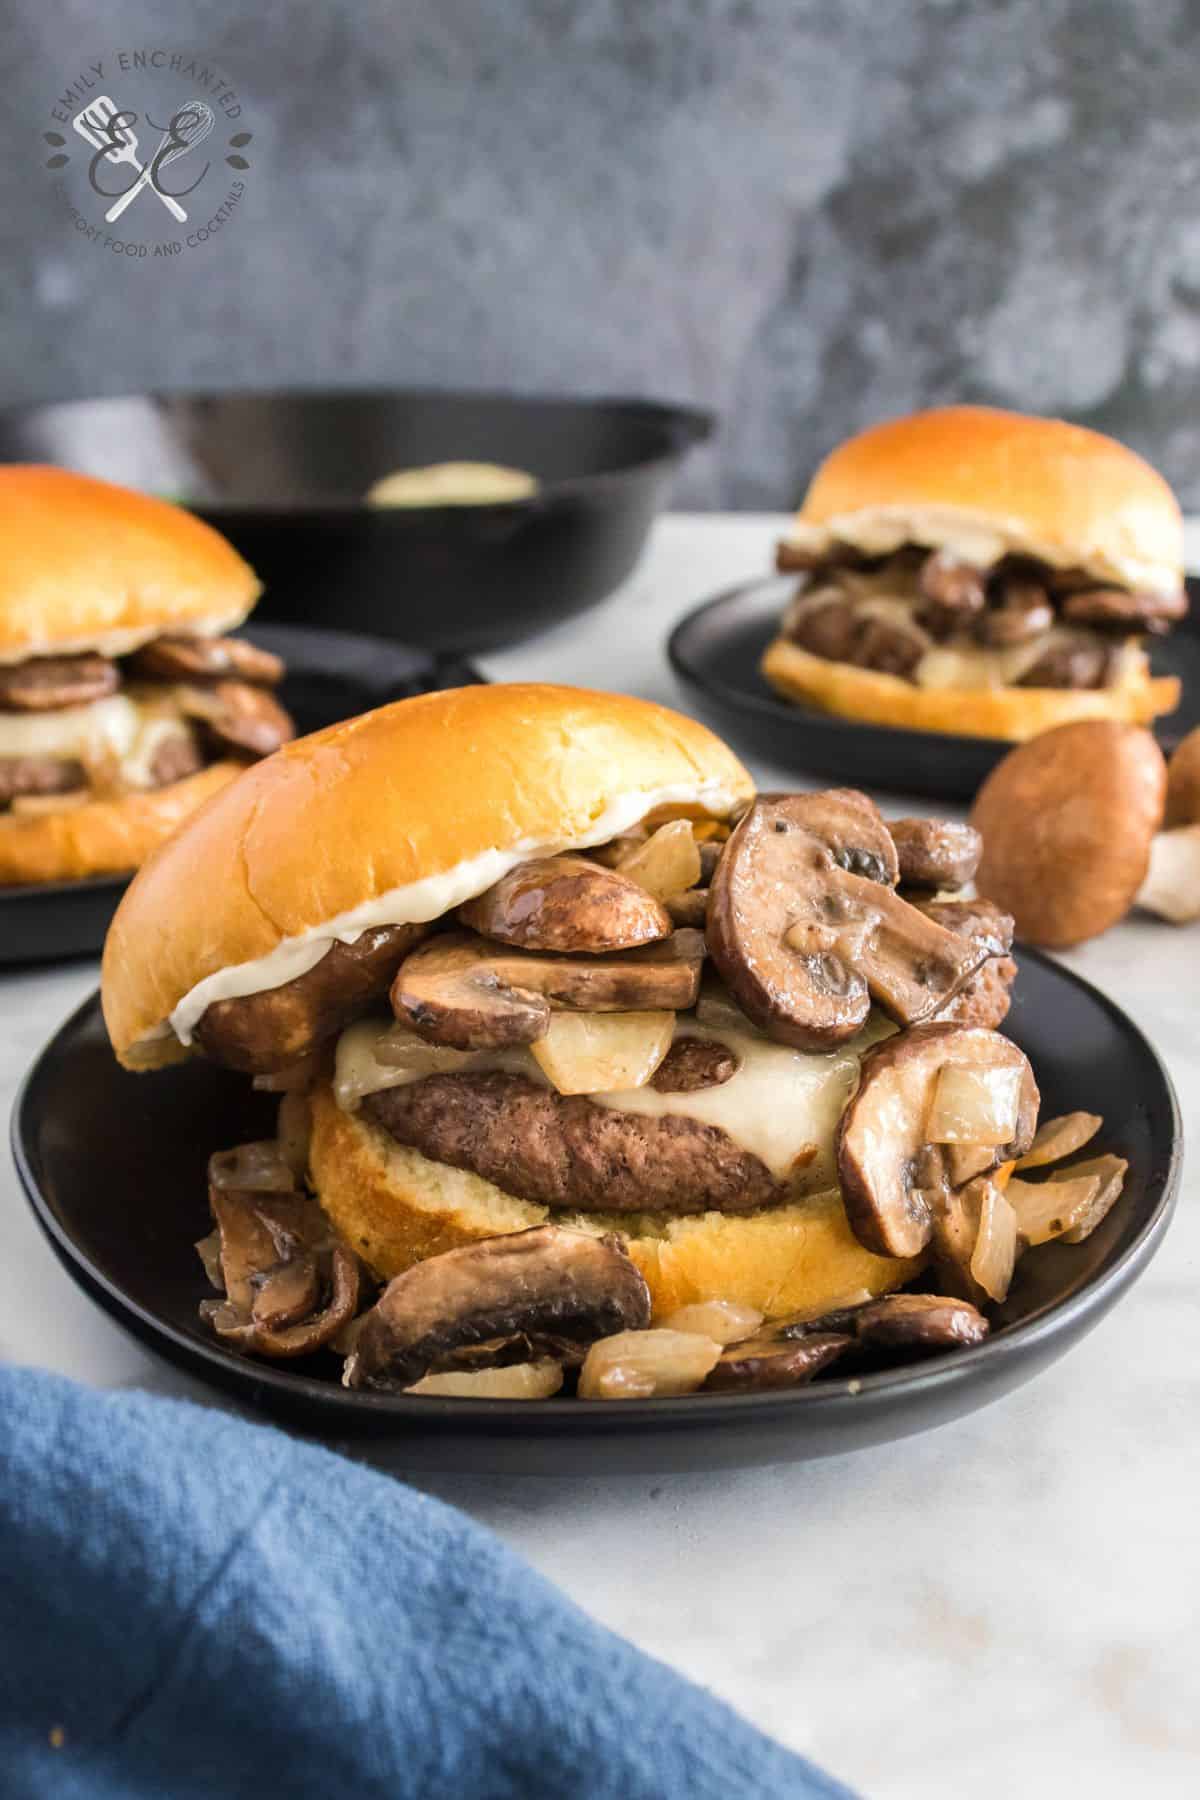 Mushroom Swiss Burger with Truffle Mayo